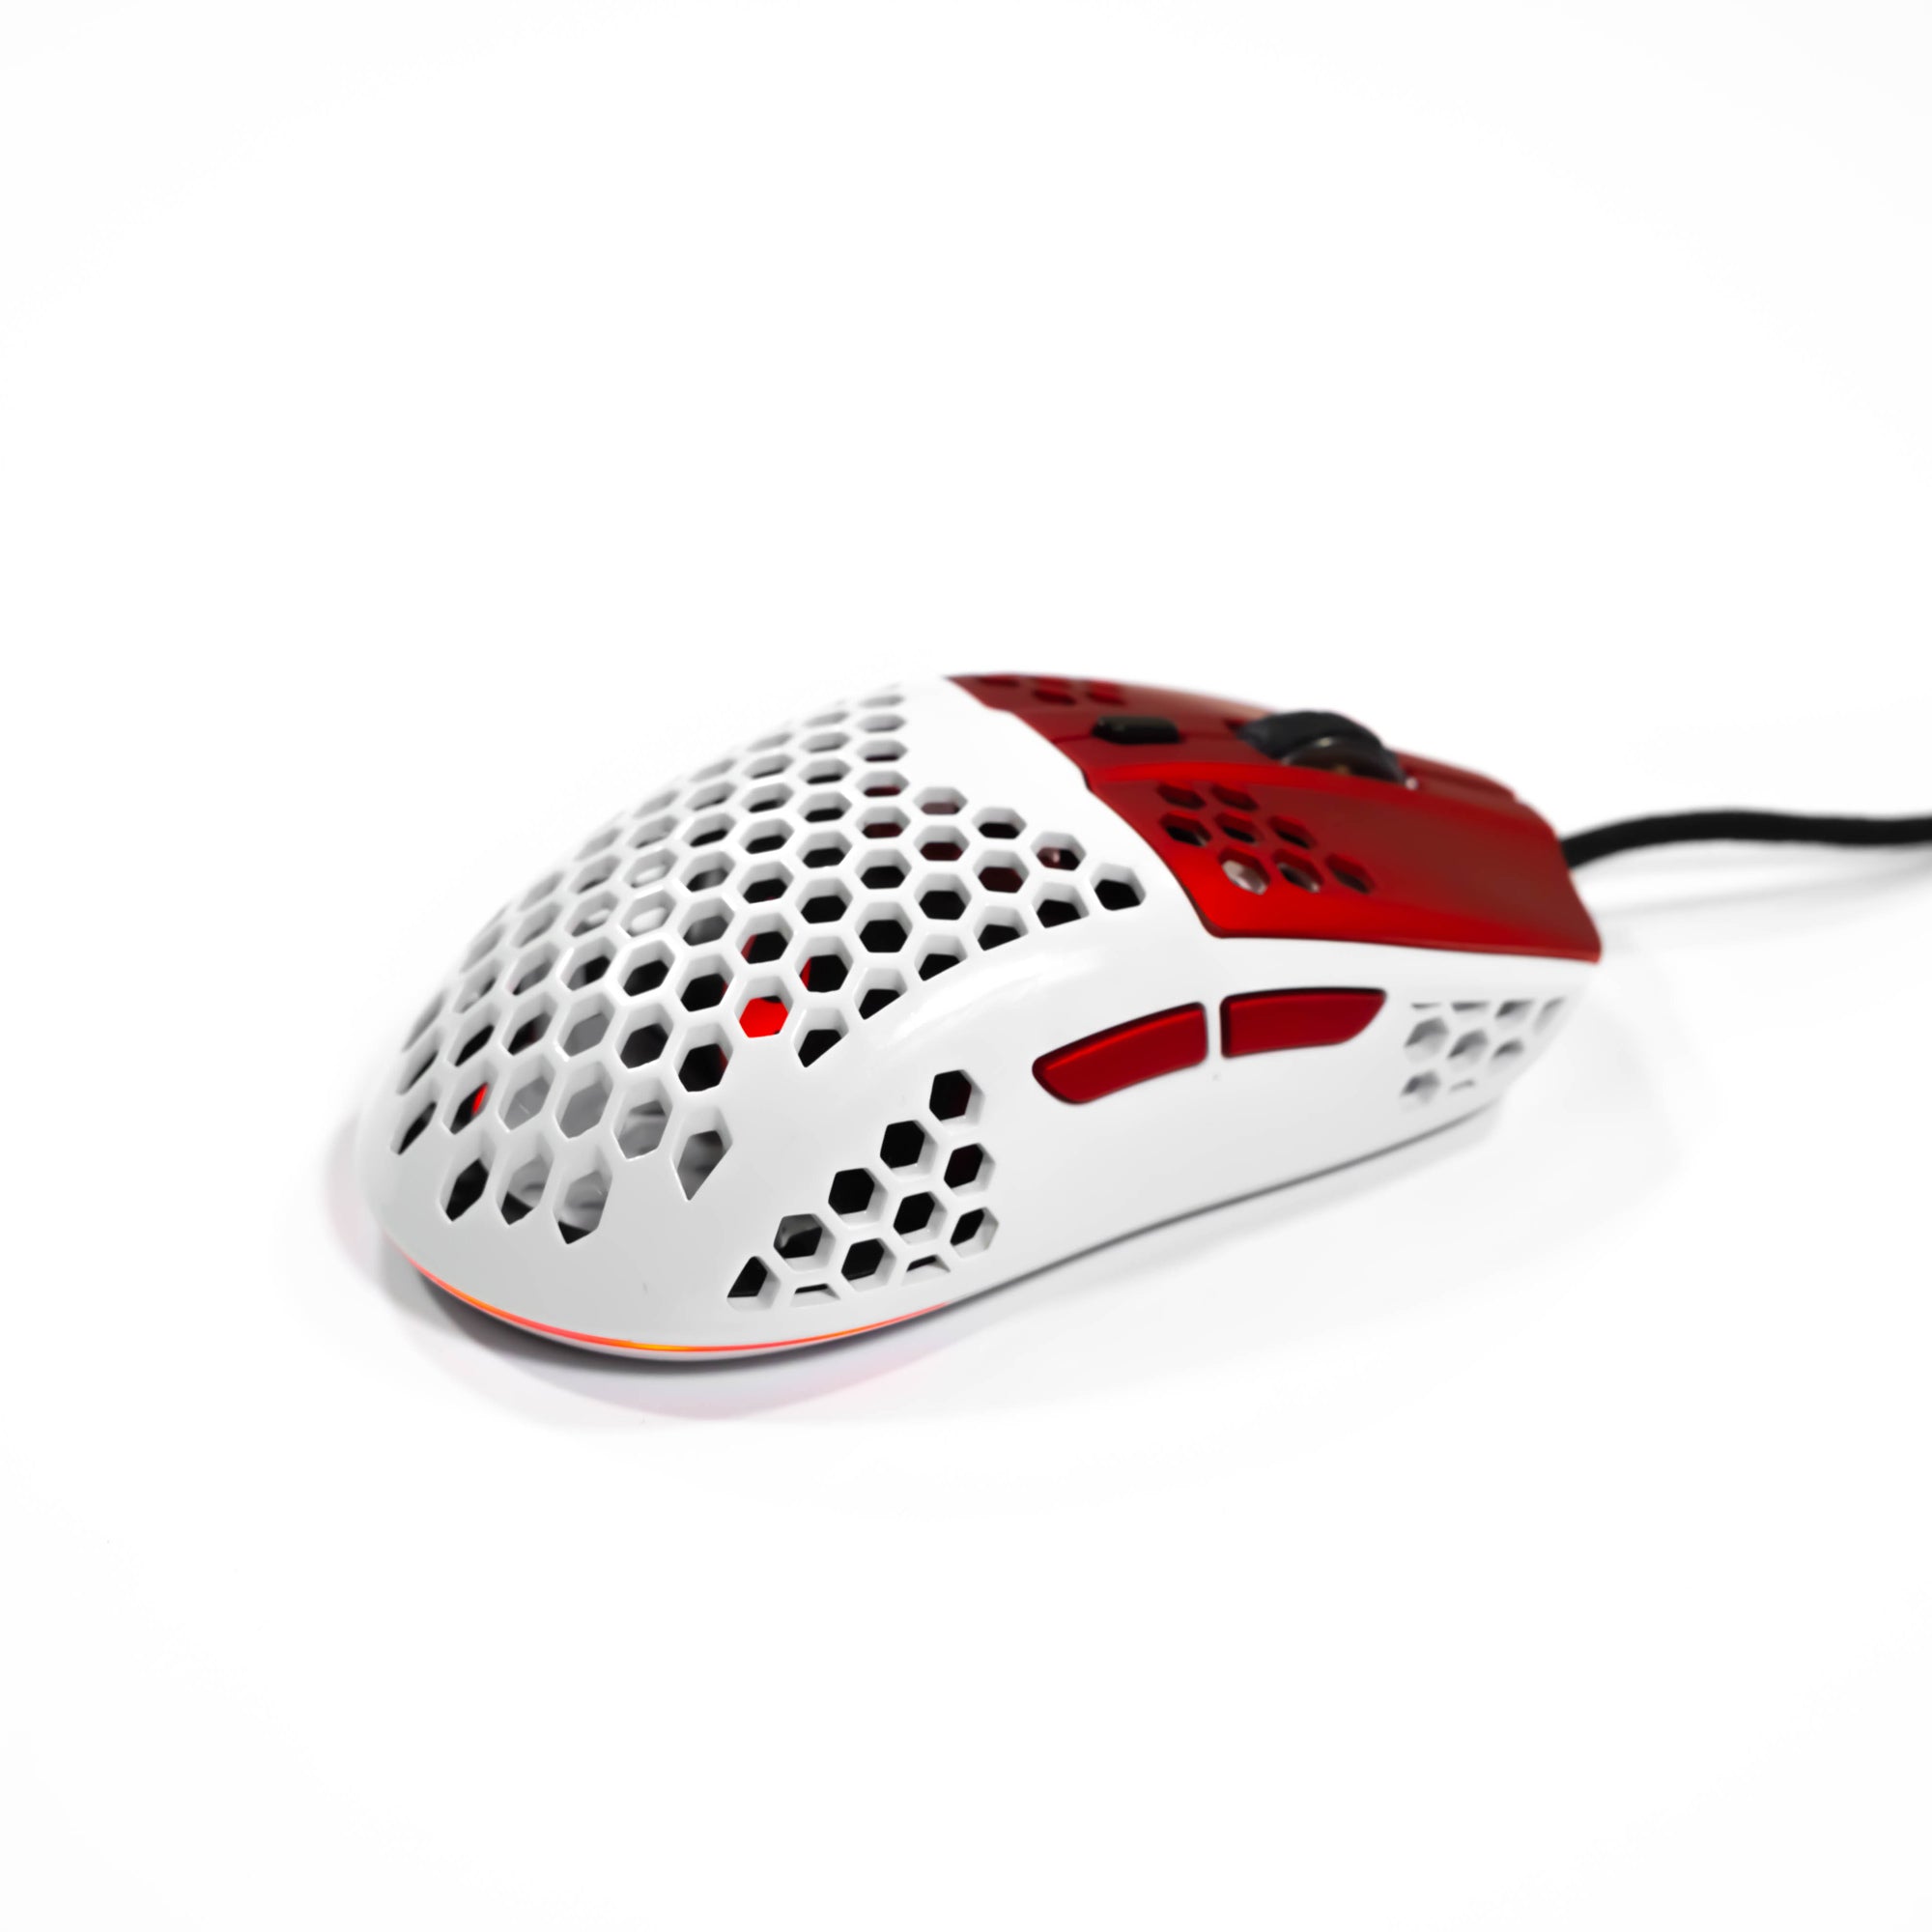 VENO | S - Ultralight Symmetrical Gaming Mouse